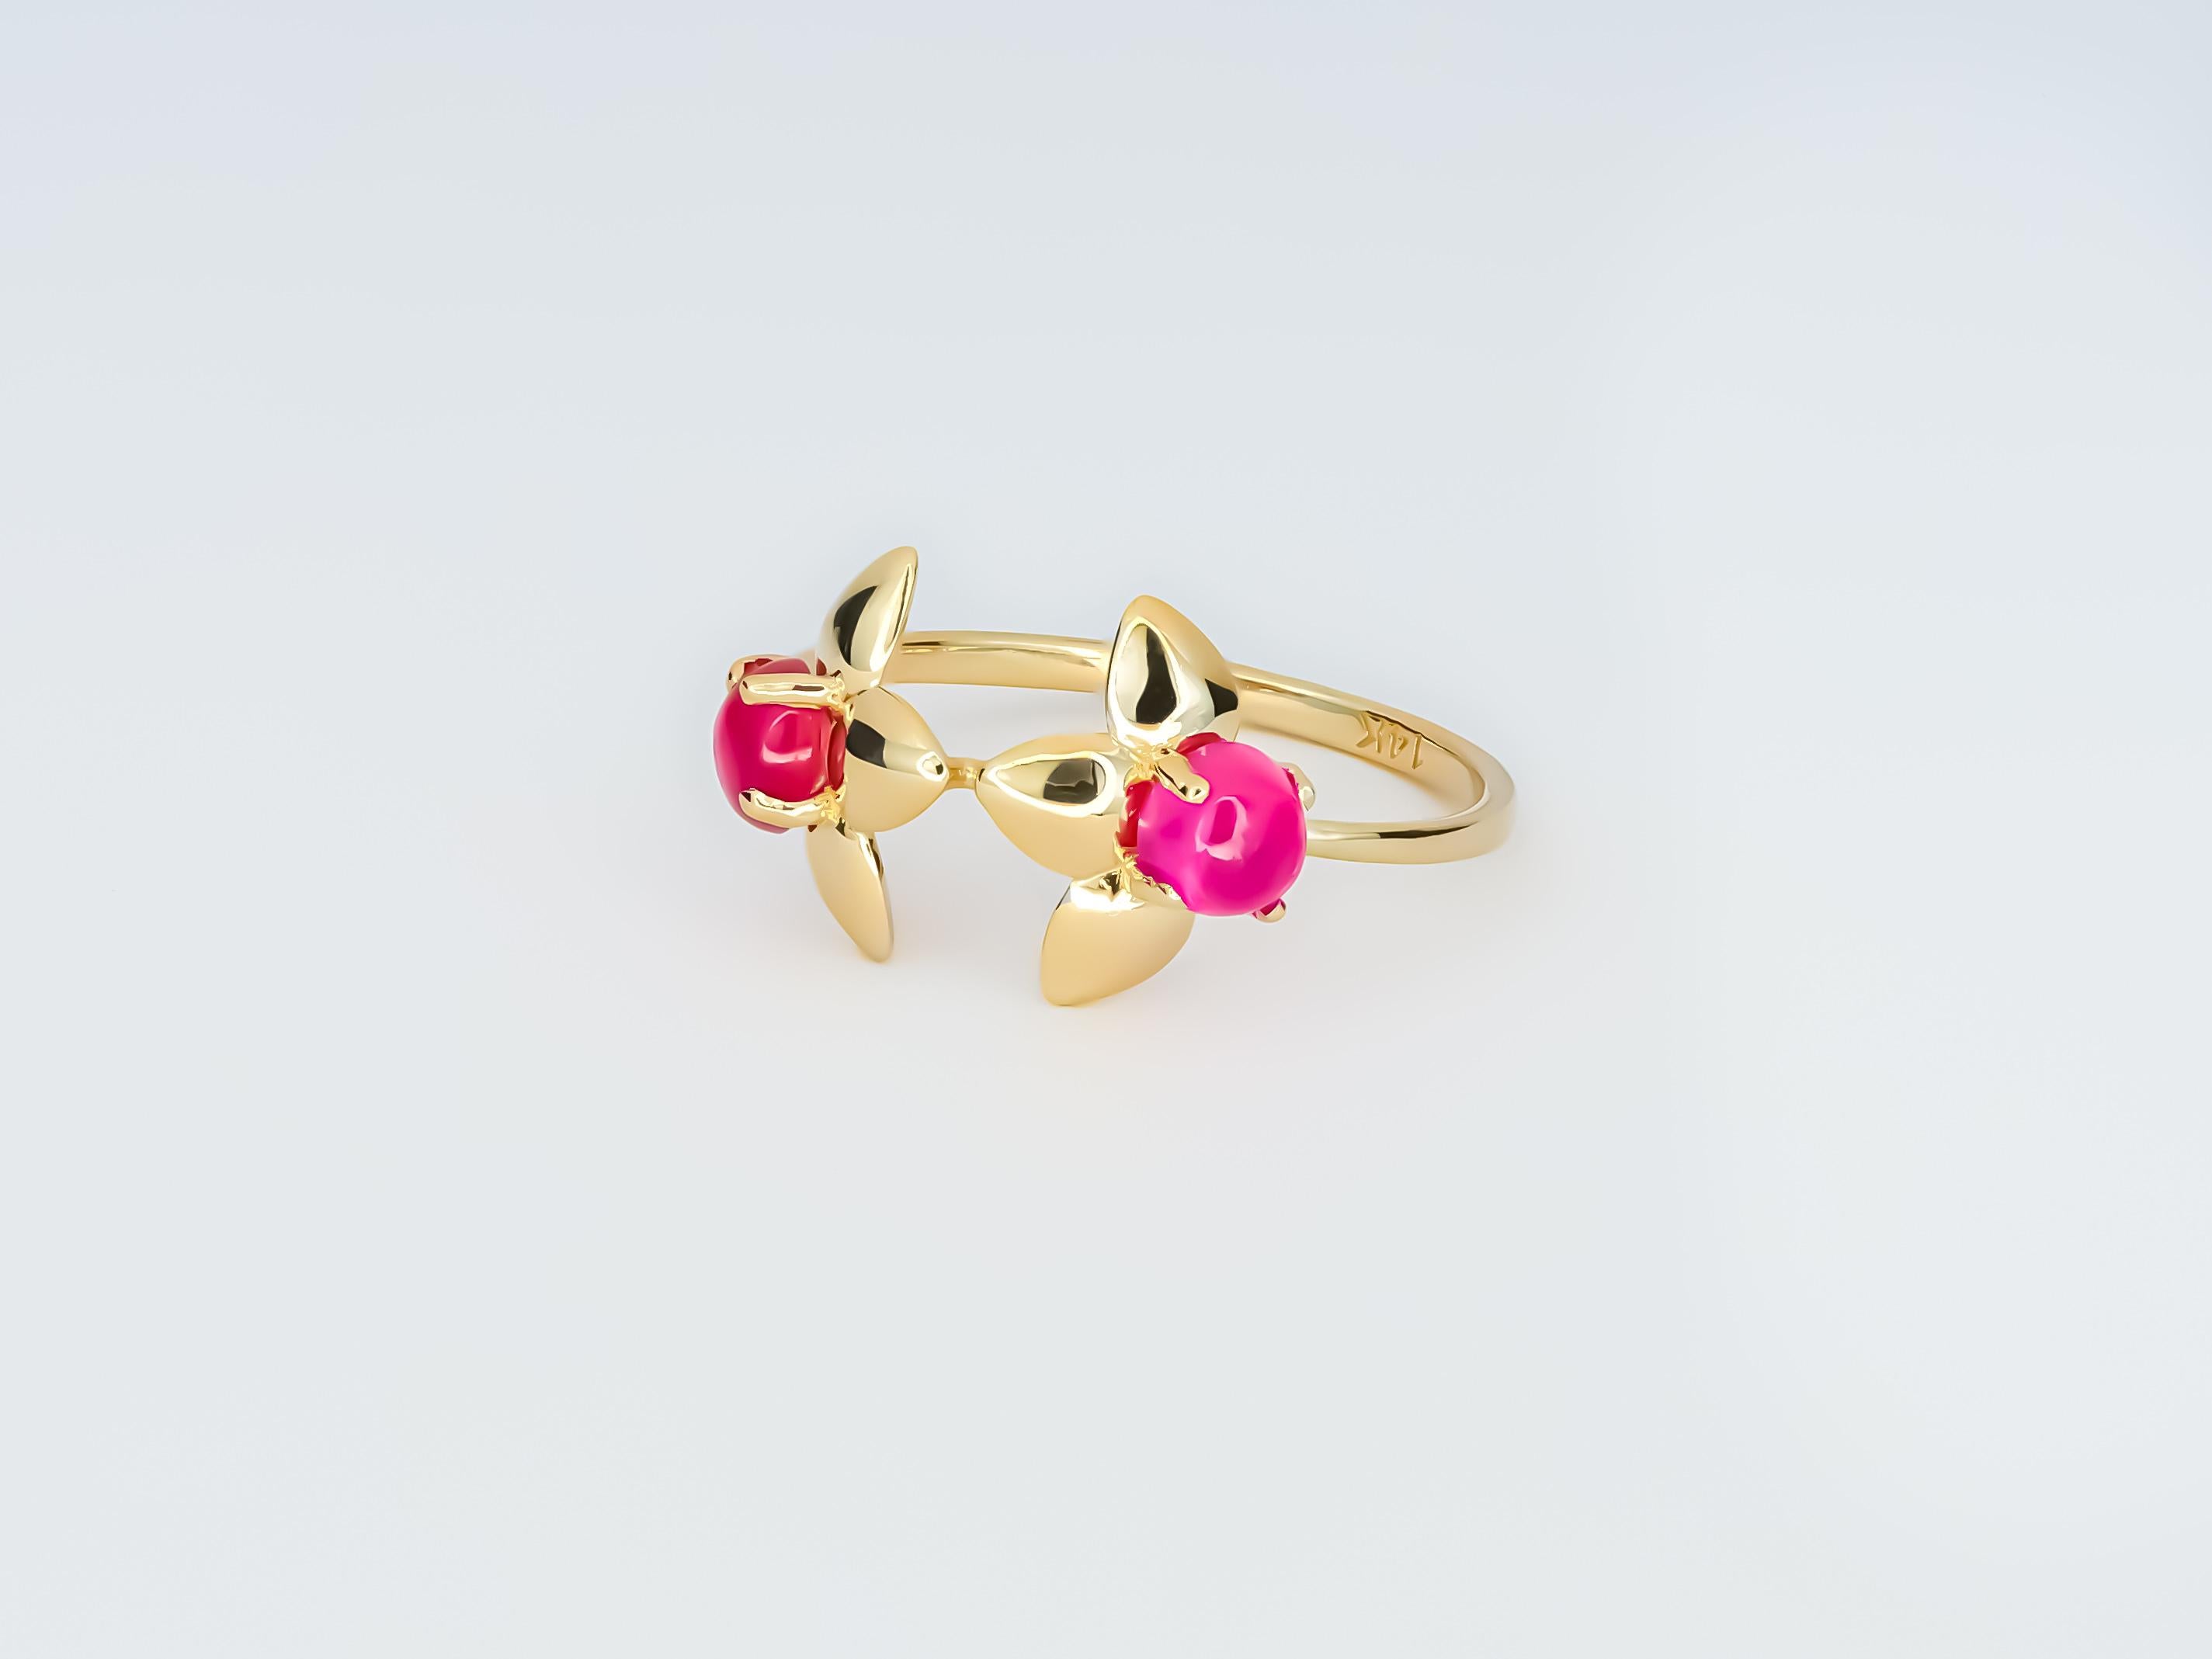 Modern 14 Karat Gold Ring with 2 Rubies, Flower Gold Ring. July birthstone ruby ring